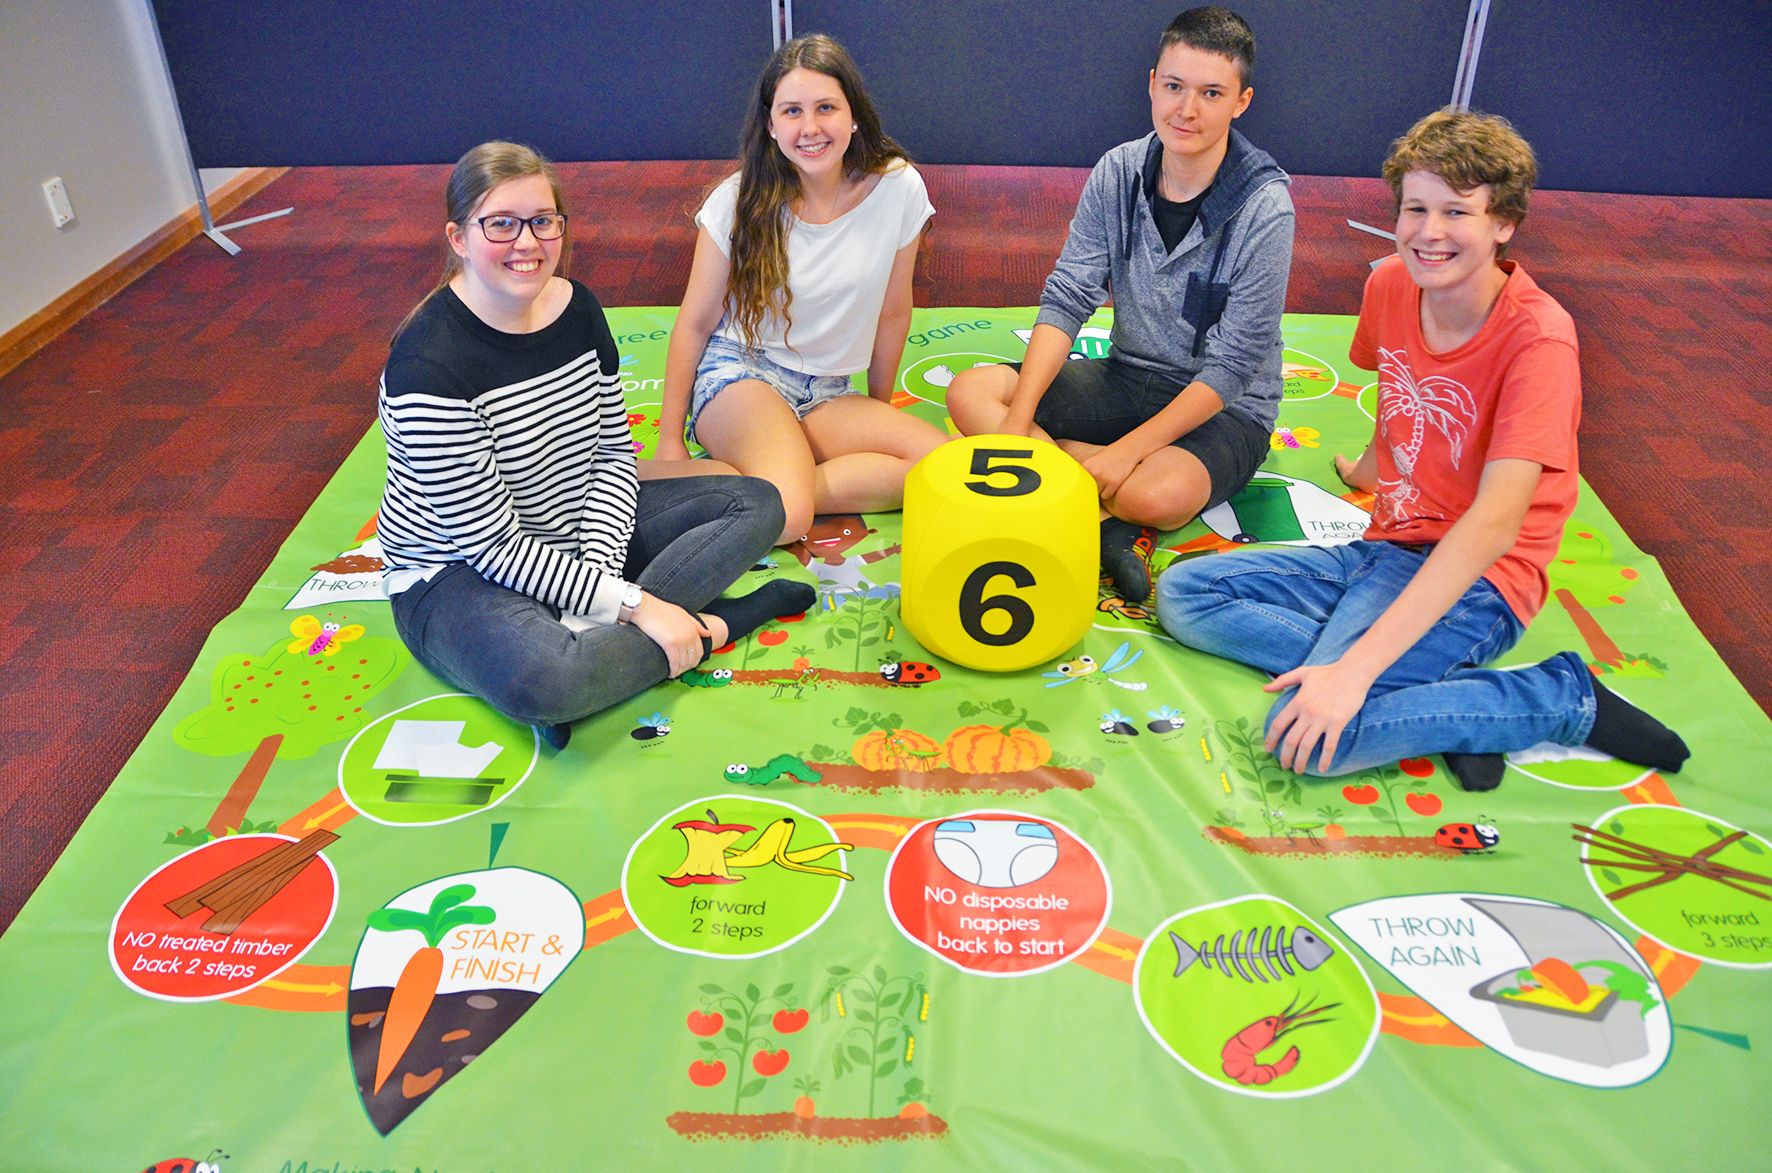 TAFE students organics recycling game